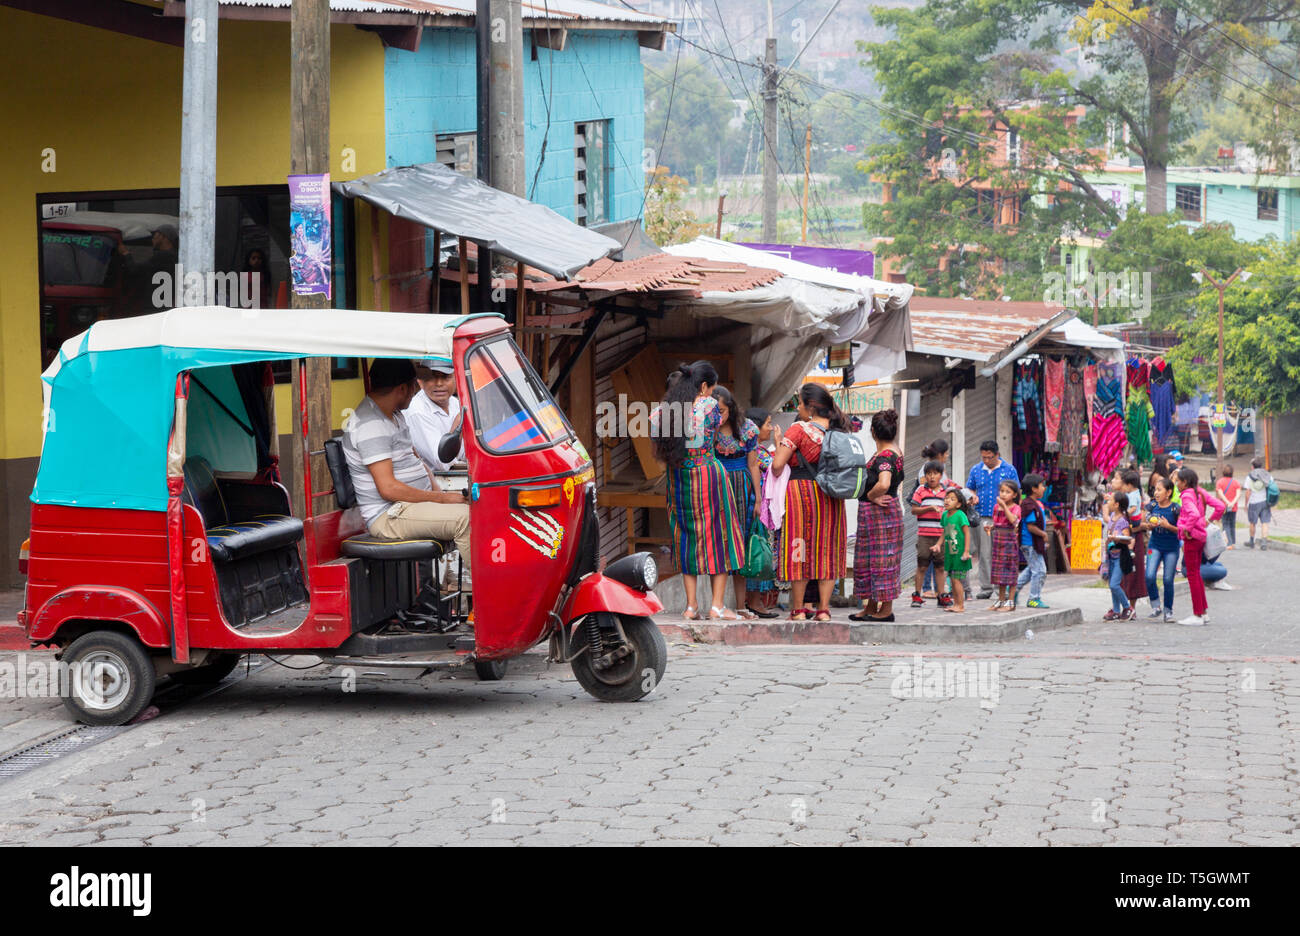 Guatemala lifestyle, Latin America - street scene with tuk tuk taxi, Santiago Atitlan town, Guatemala Latin America Stock Photo